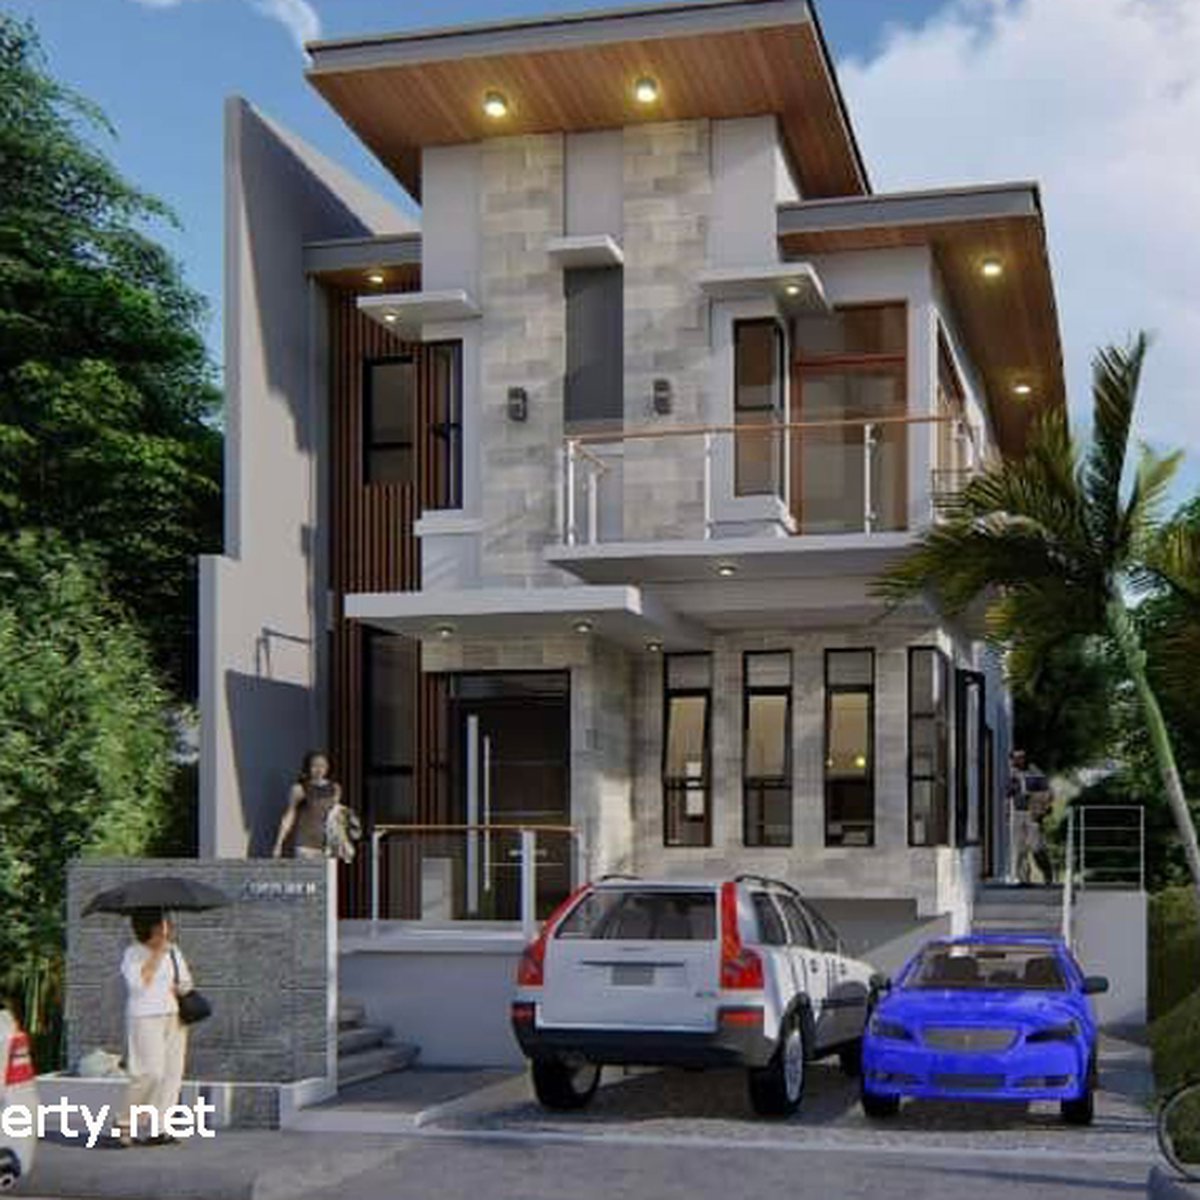 4-bedroom Single Attached House For Sale in Cebu City Cebu